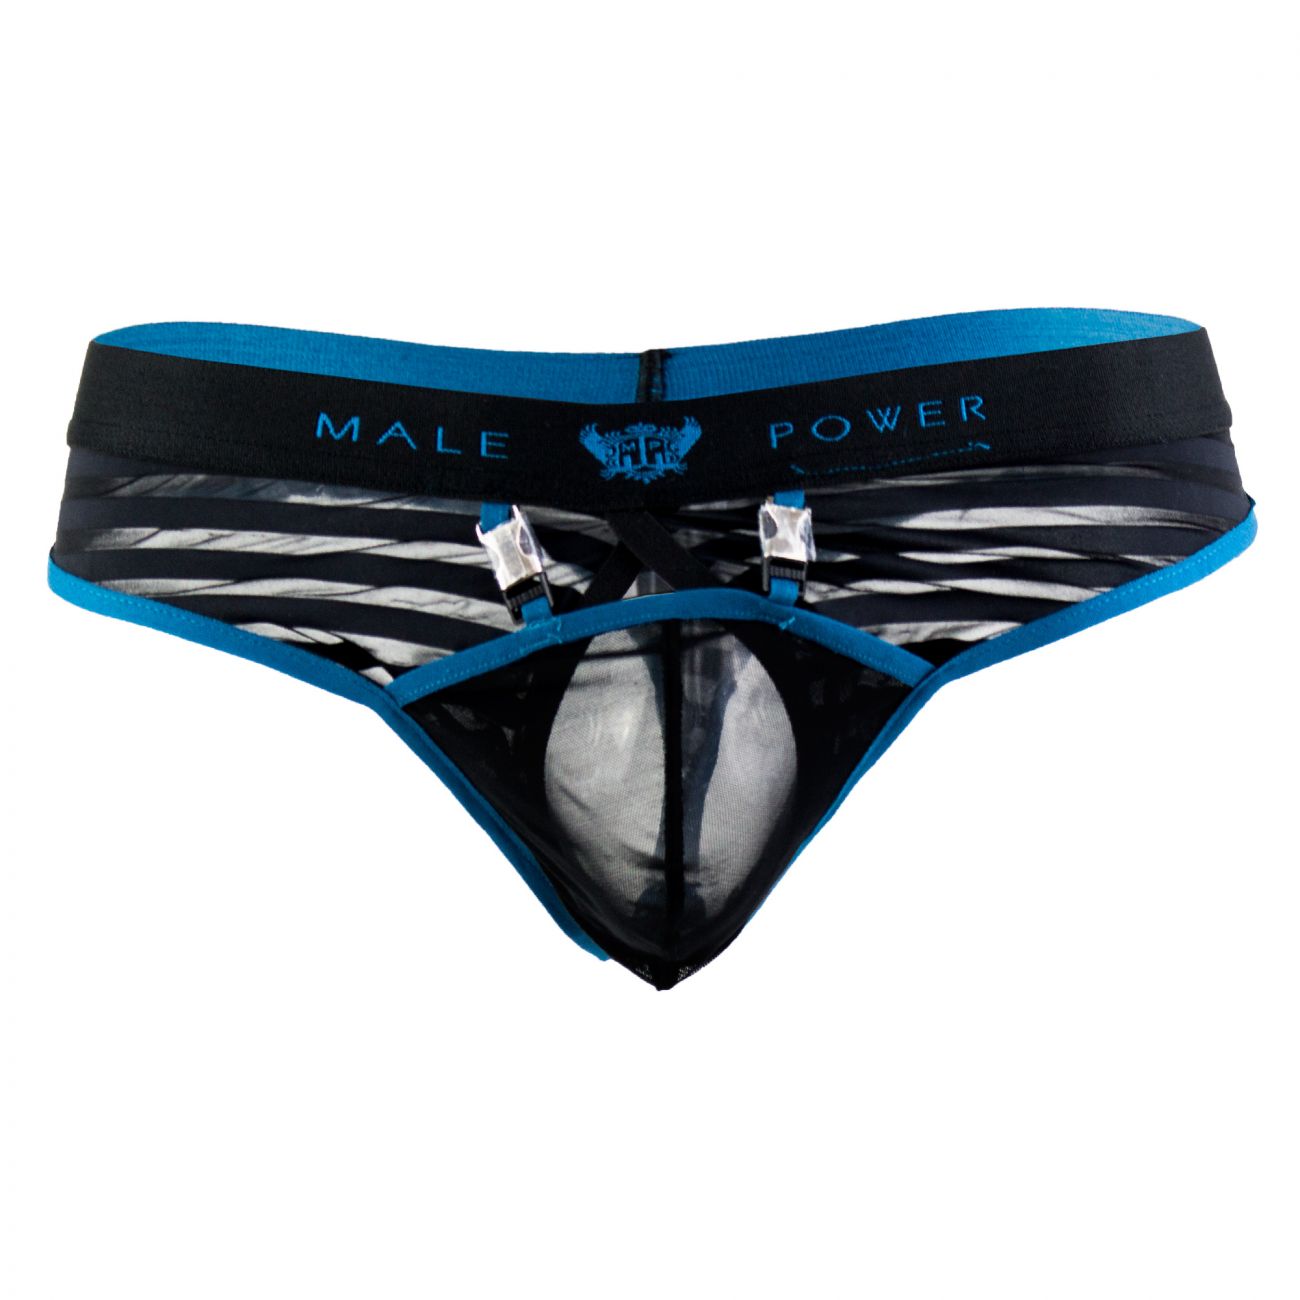 Mens Underwear: Male Power 415239 Clip Tease Clip Thong | eBay